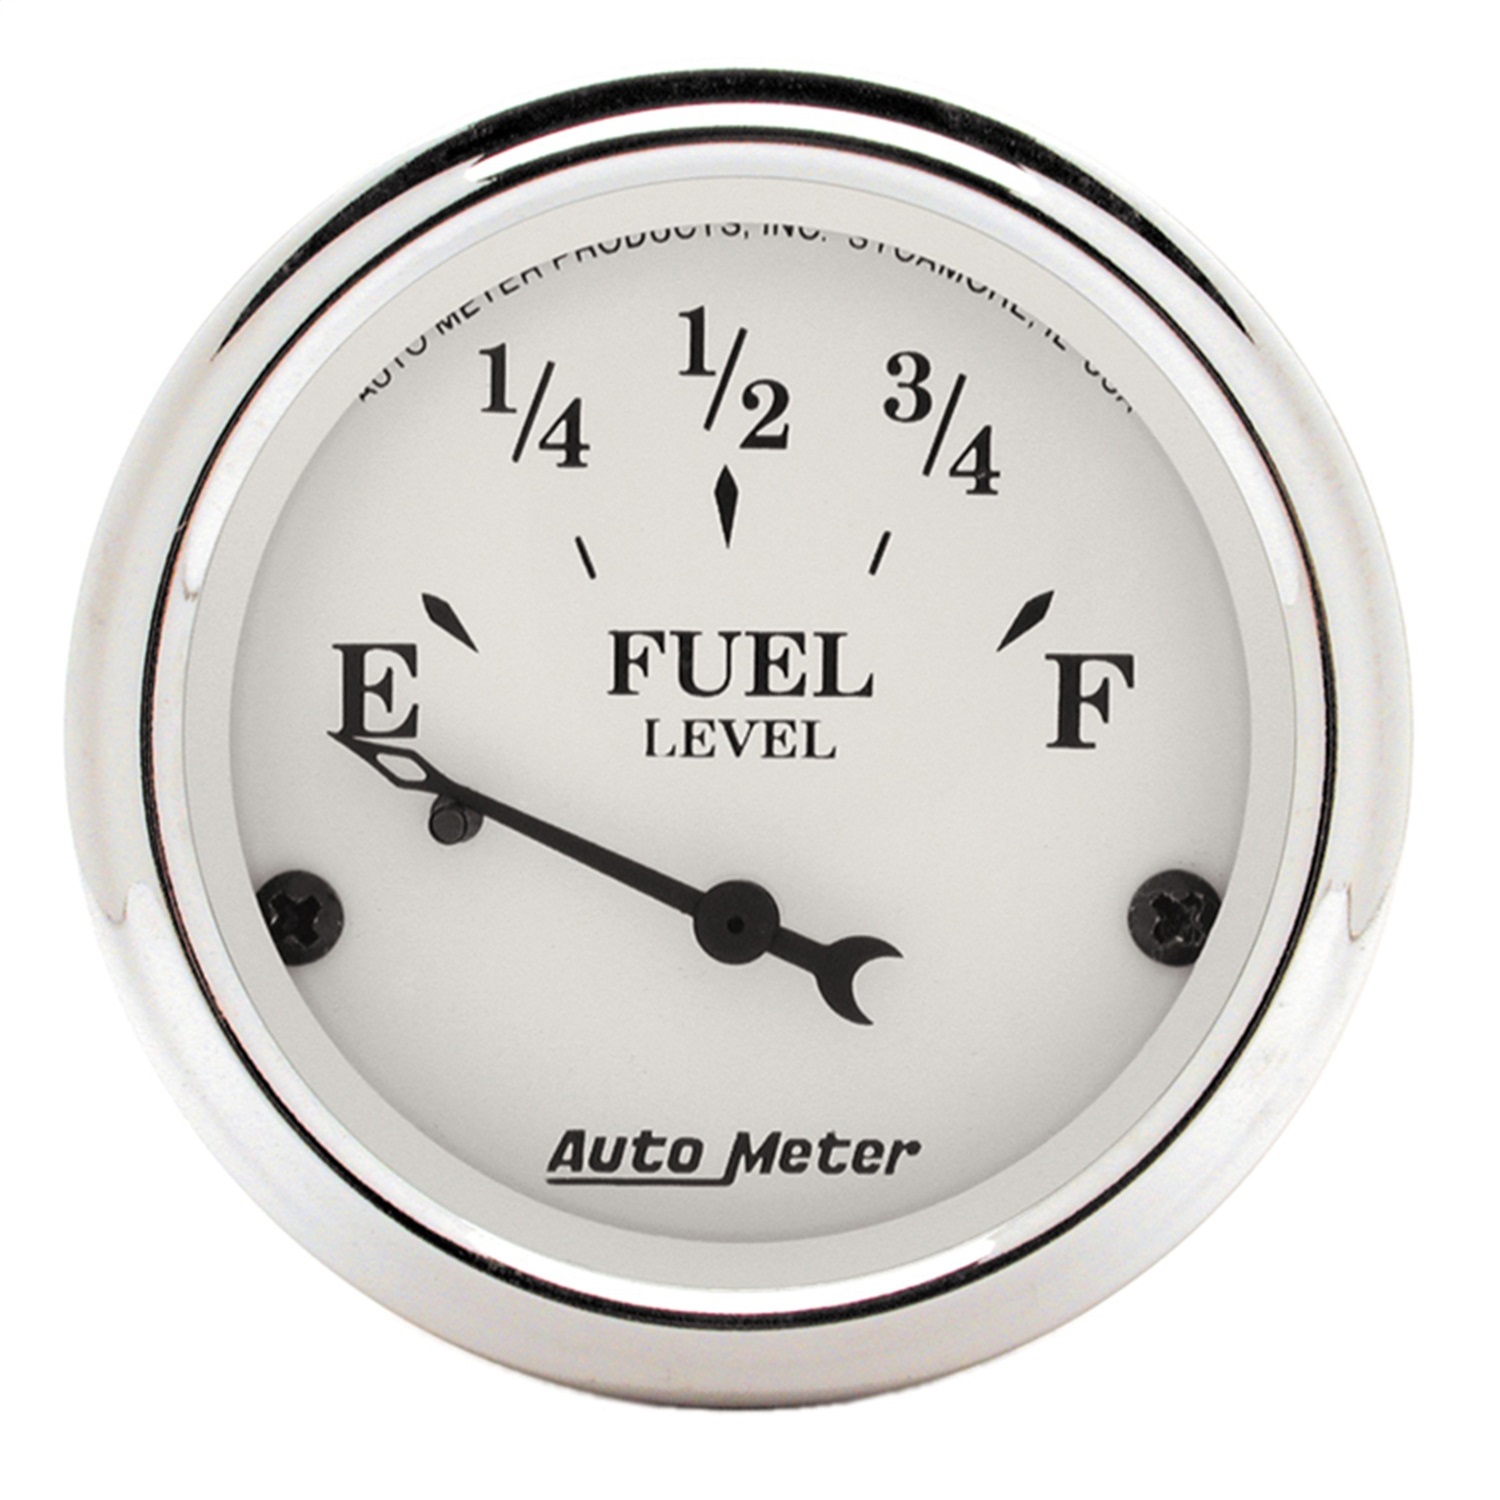 Auto Meter Auto Meter 1605 Old Tyme White; Fuel Level Gauge